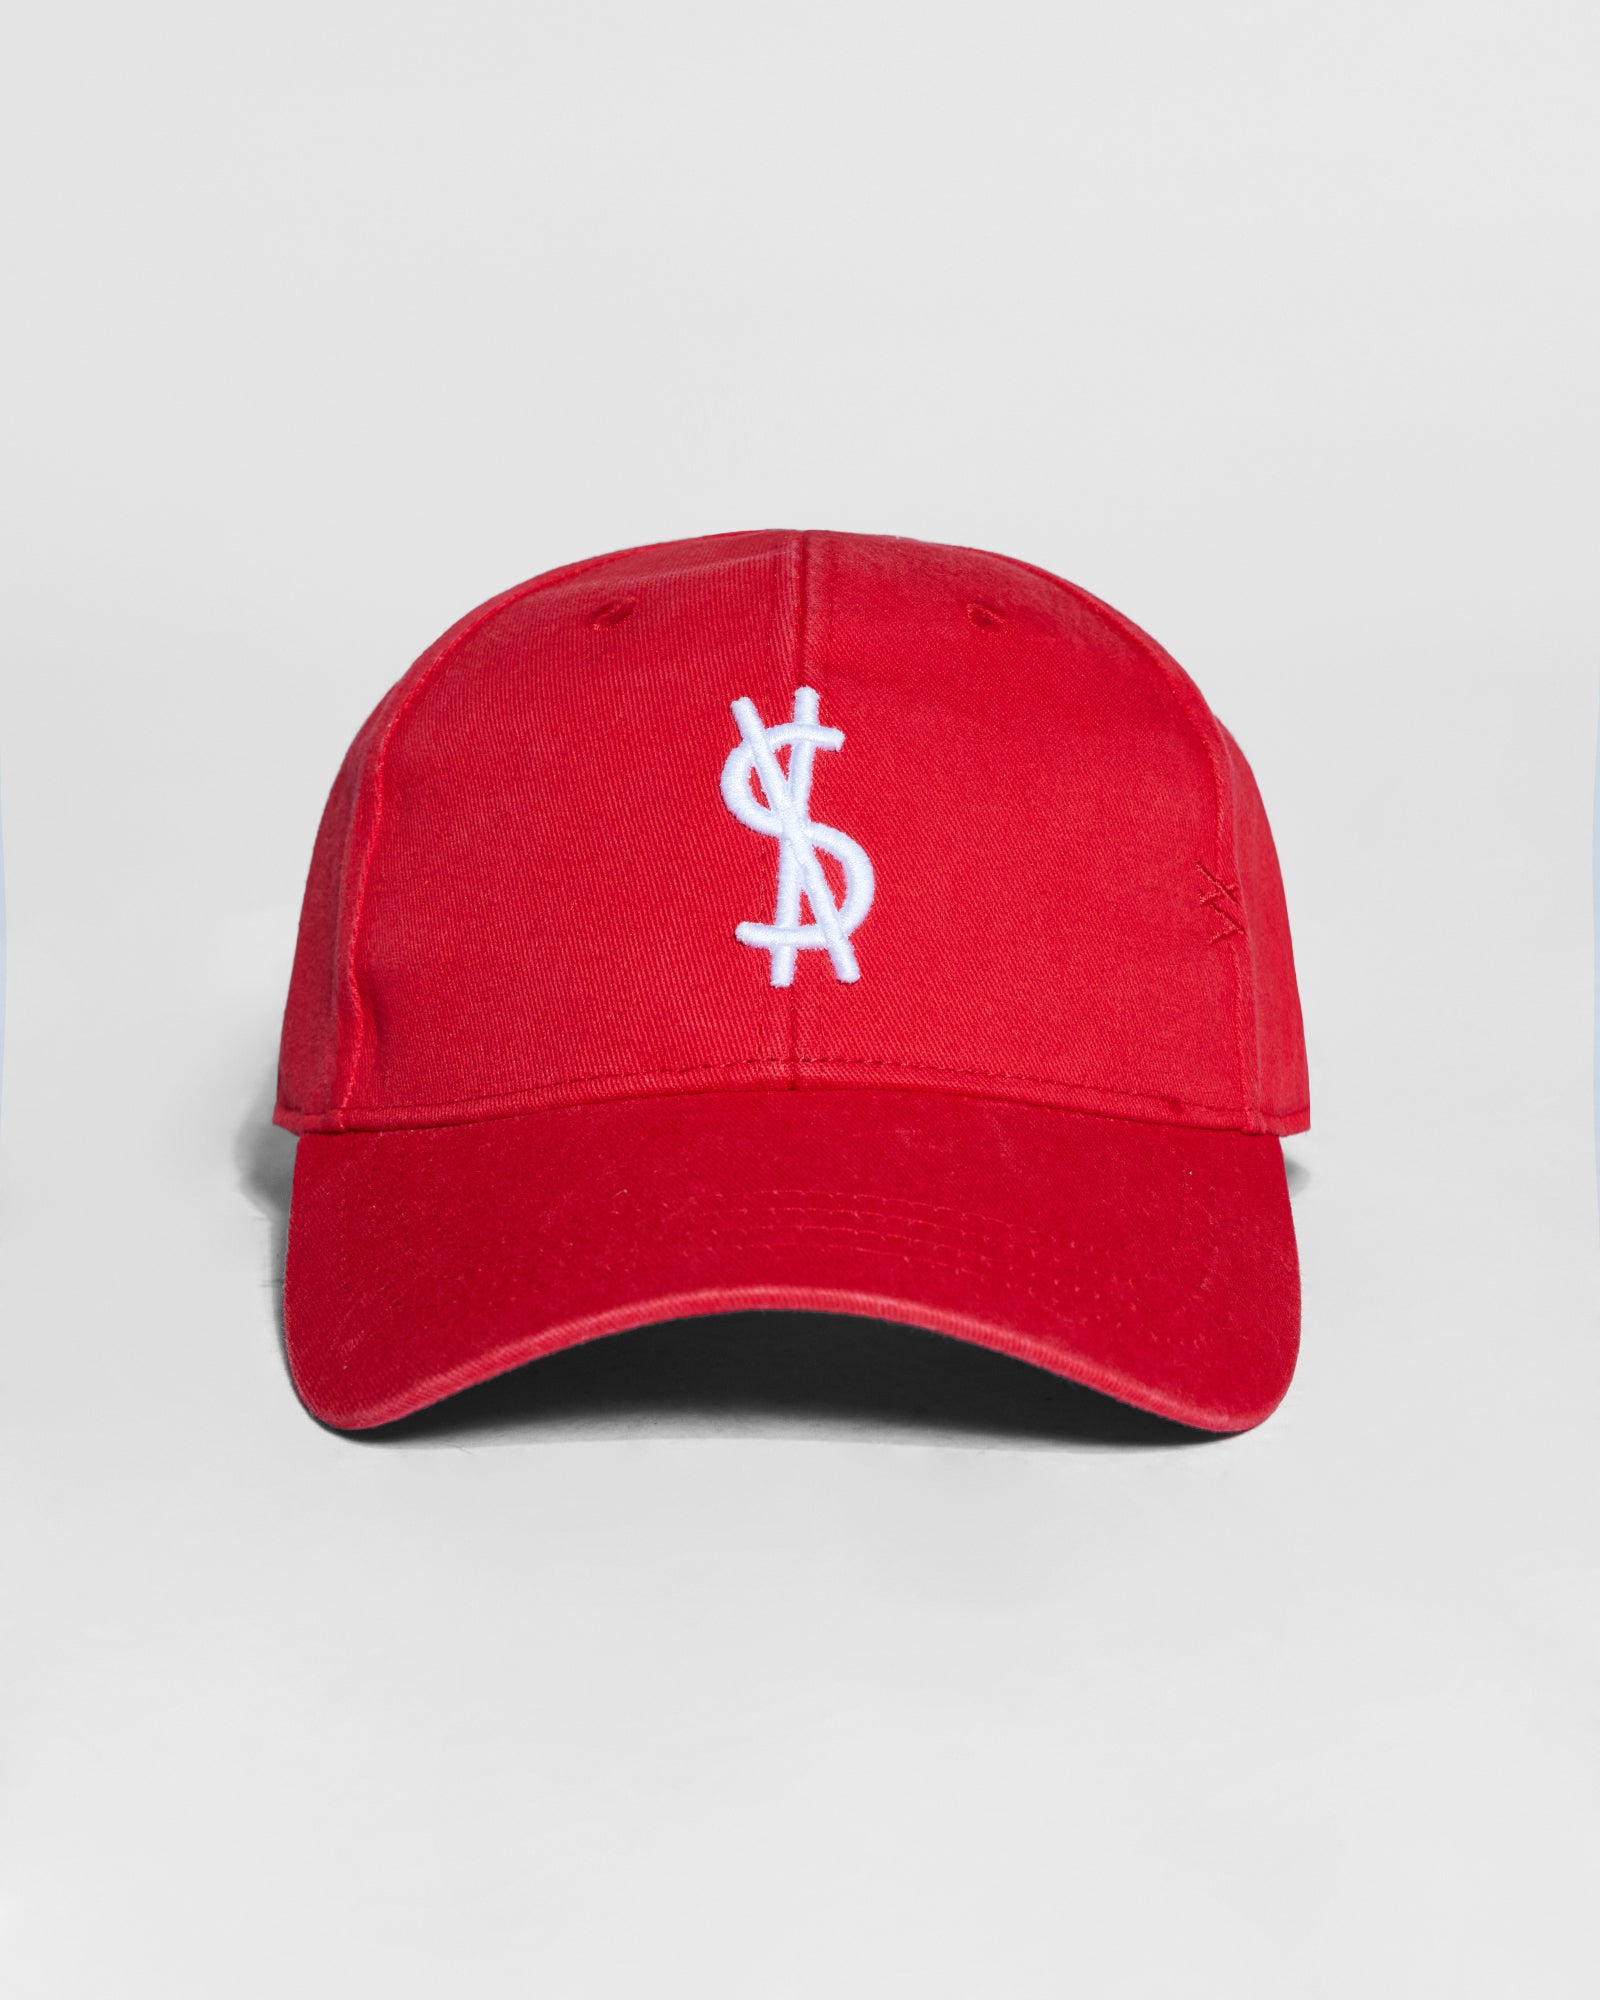 4 X 4 CROSS DOLLAR CAP RED